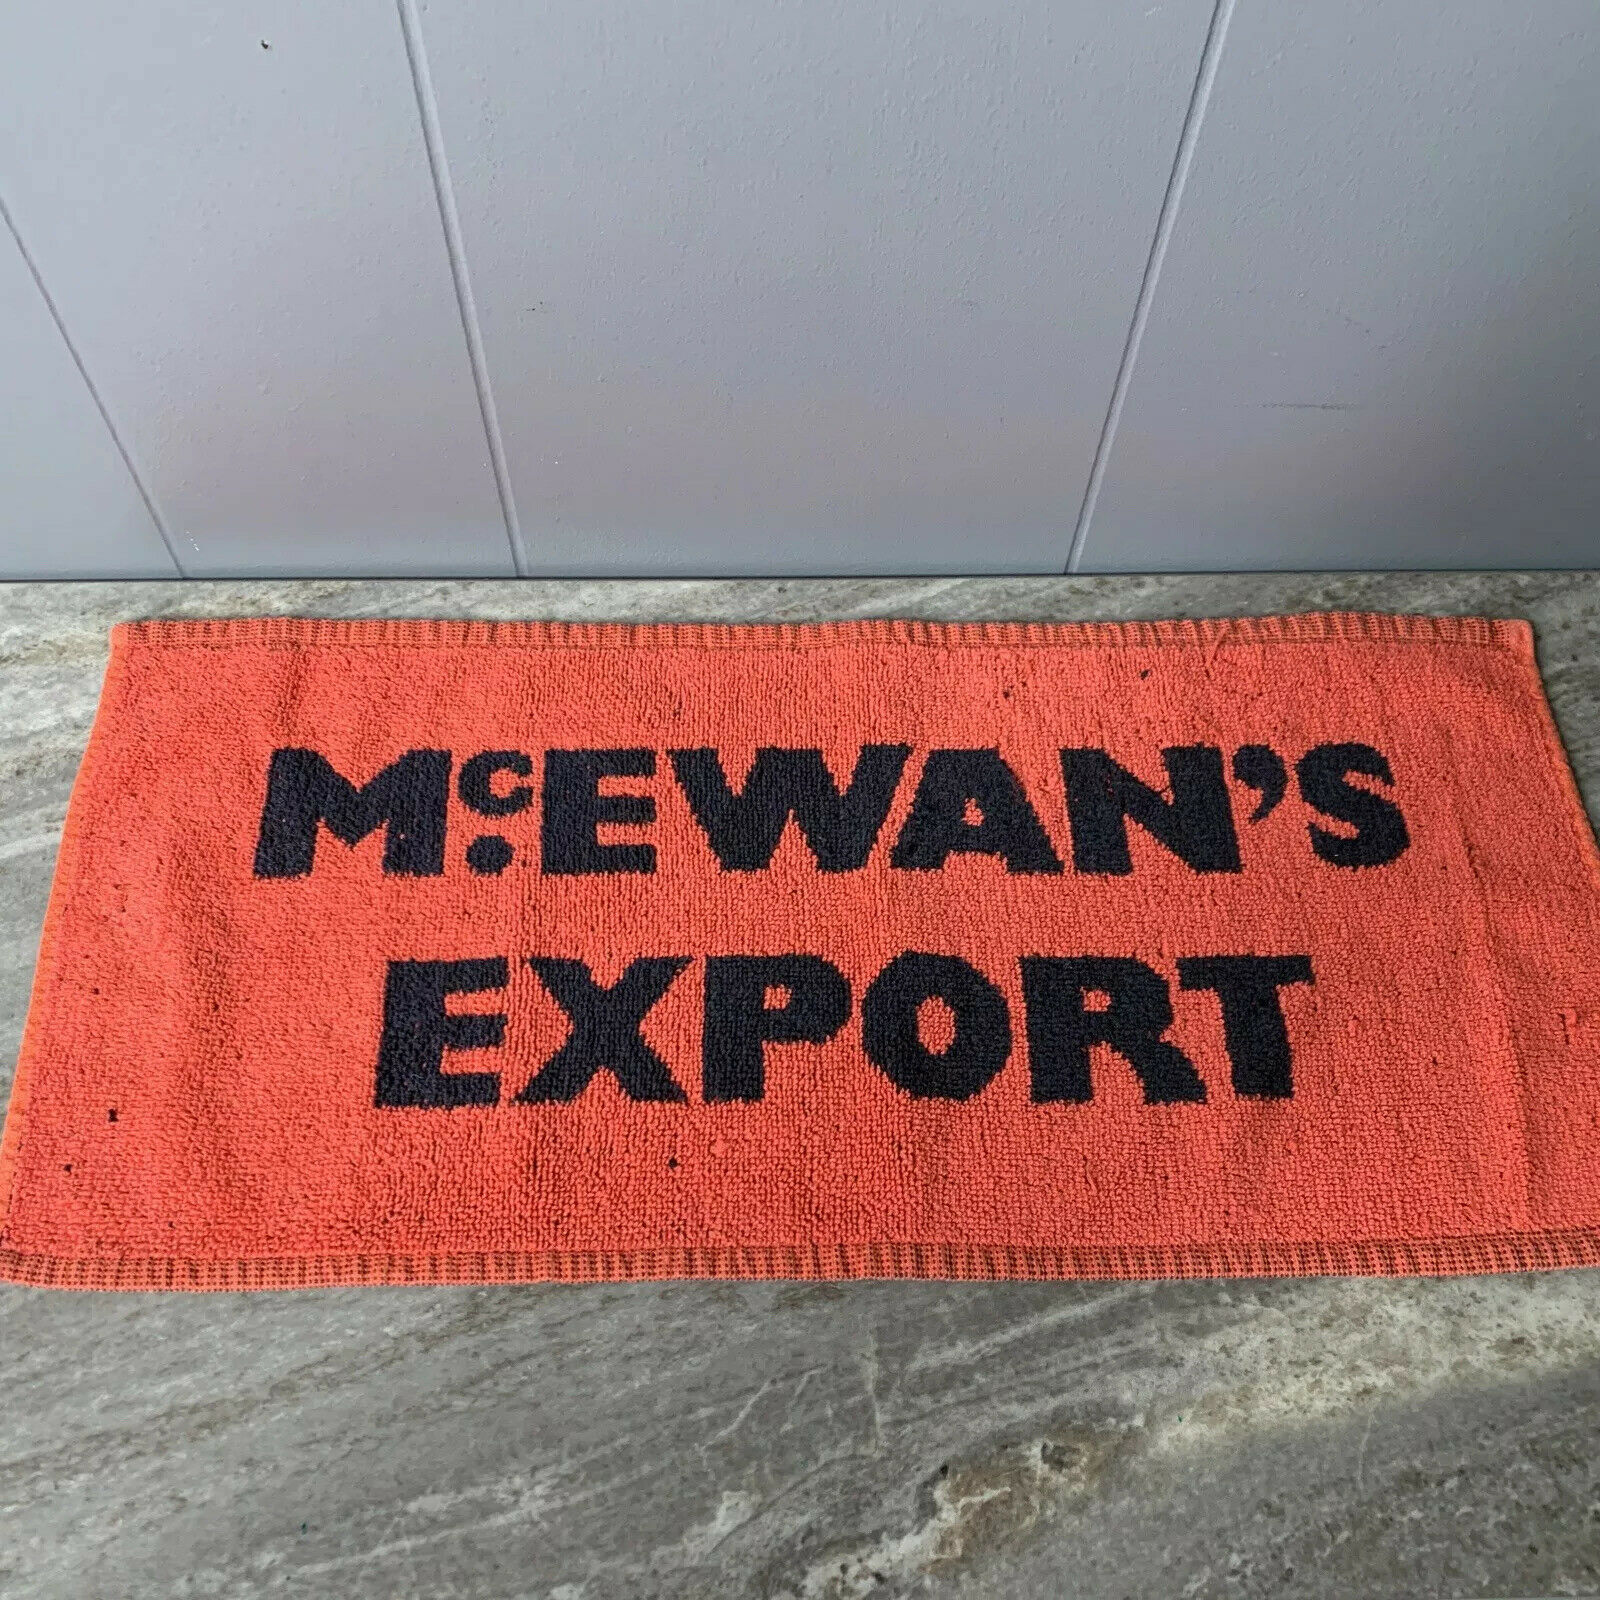 Mcewan’s Export Vintage Beer Pub Home Bar Towel Guiness Retro Man Cave Red